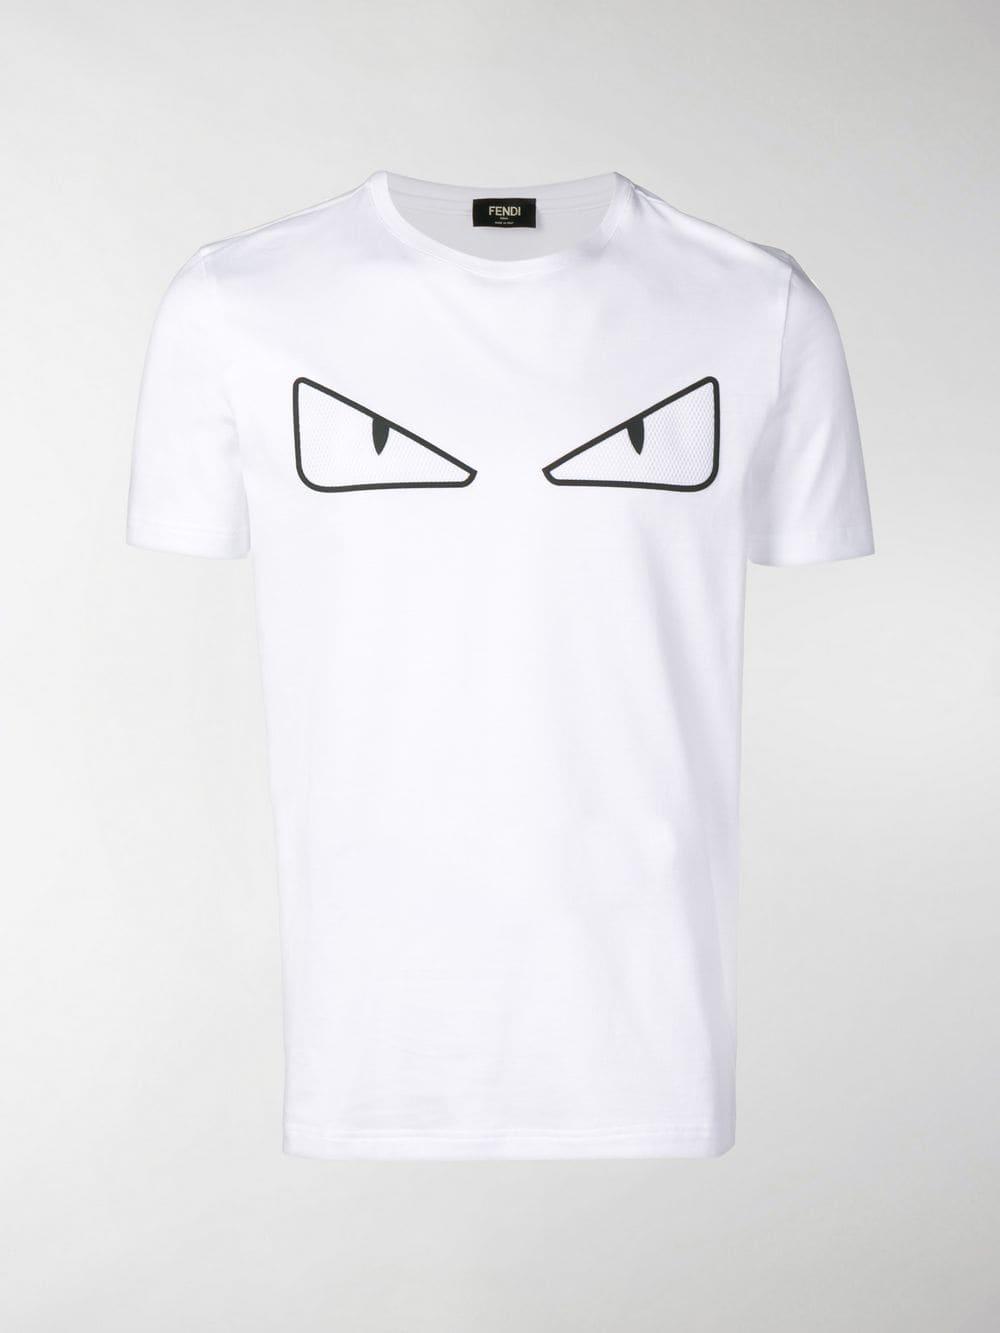 Fendi T Shirt Men Best Sale, SAVE 38% - raptorunderlayment.com